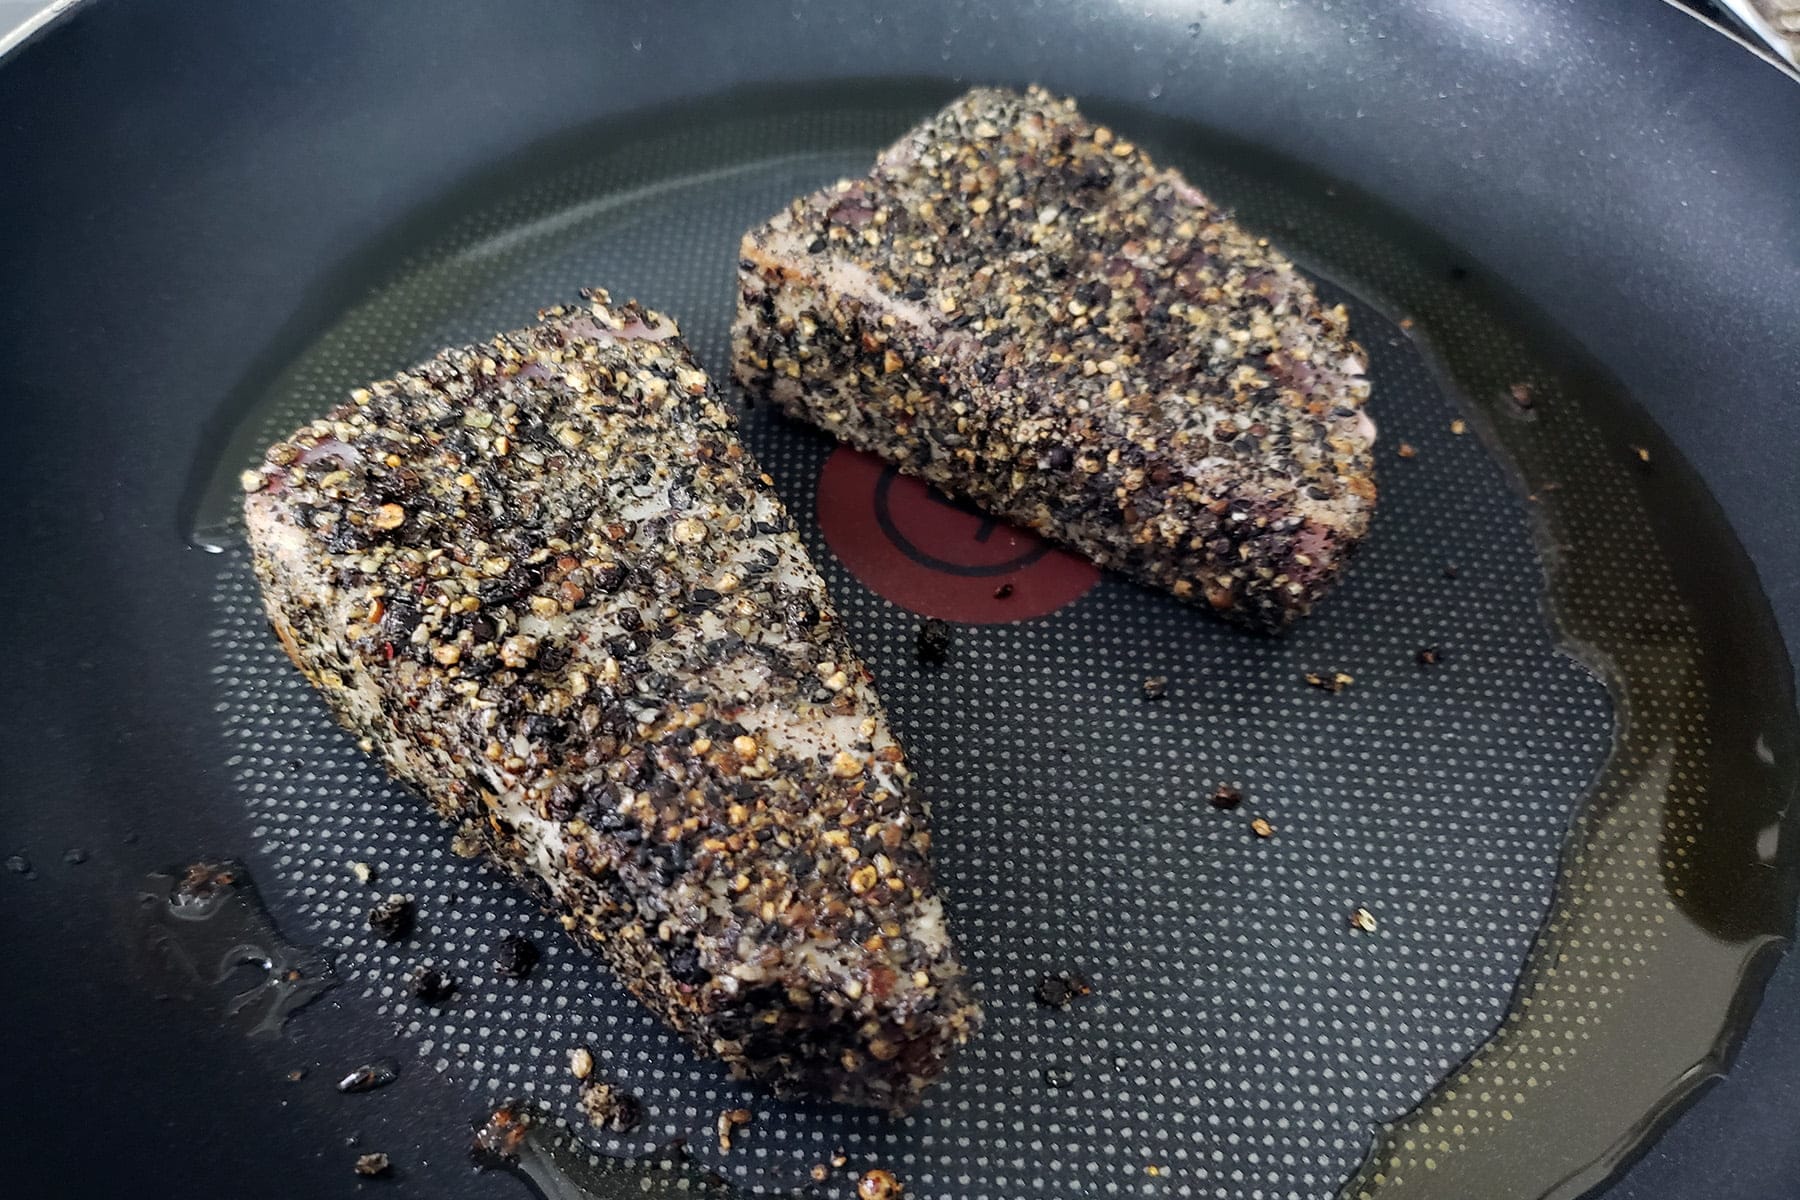 2 Pepper crusted tuna steaks, cooking in a nonstick pan.